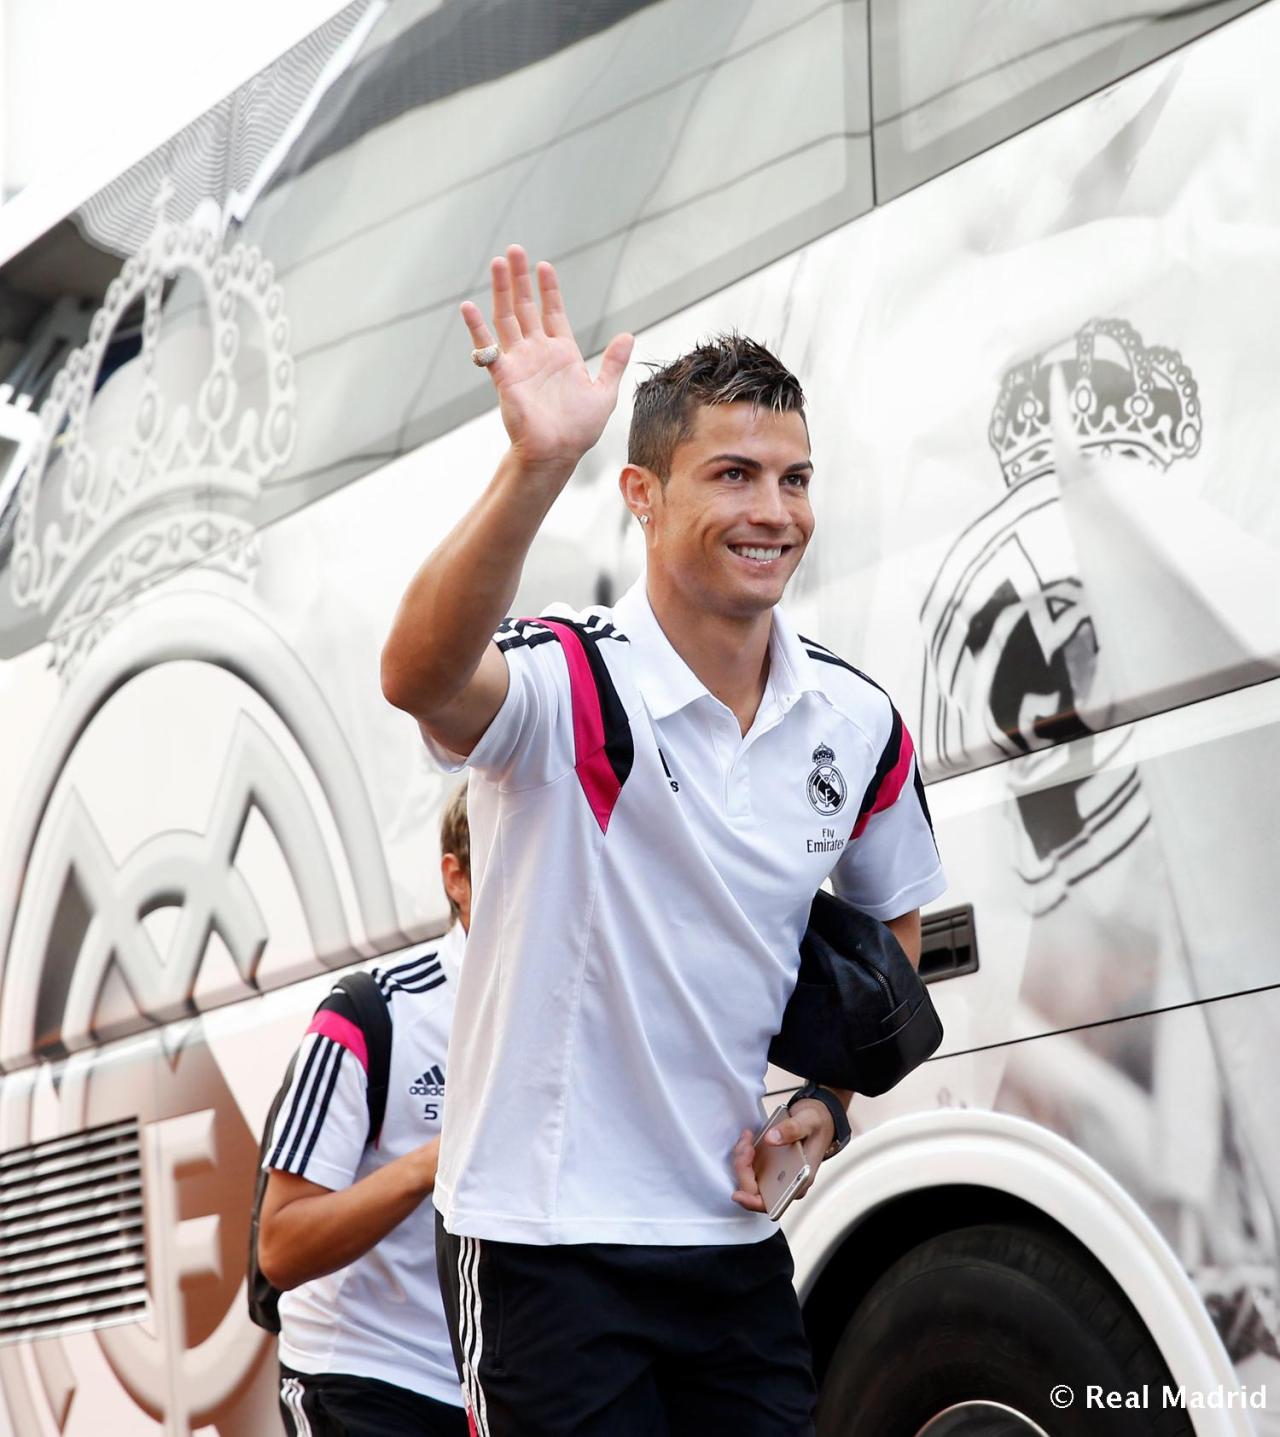 All about Cristiano Ronaldo dos Santos Aveiro — caseallas: This gif though  just its like